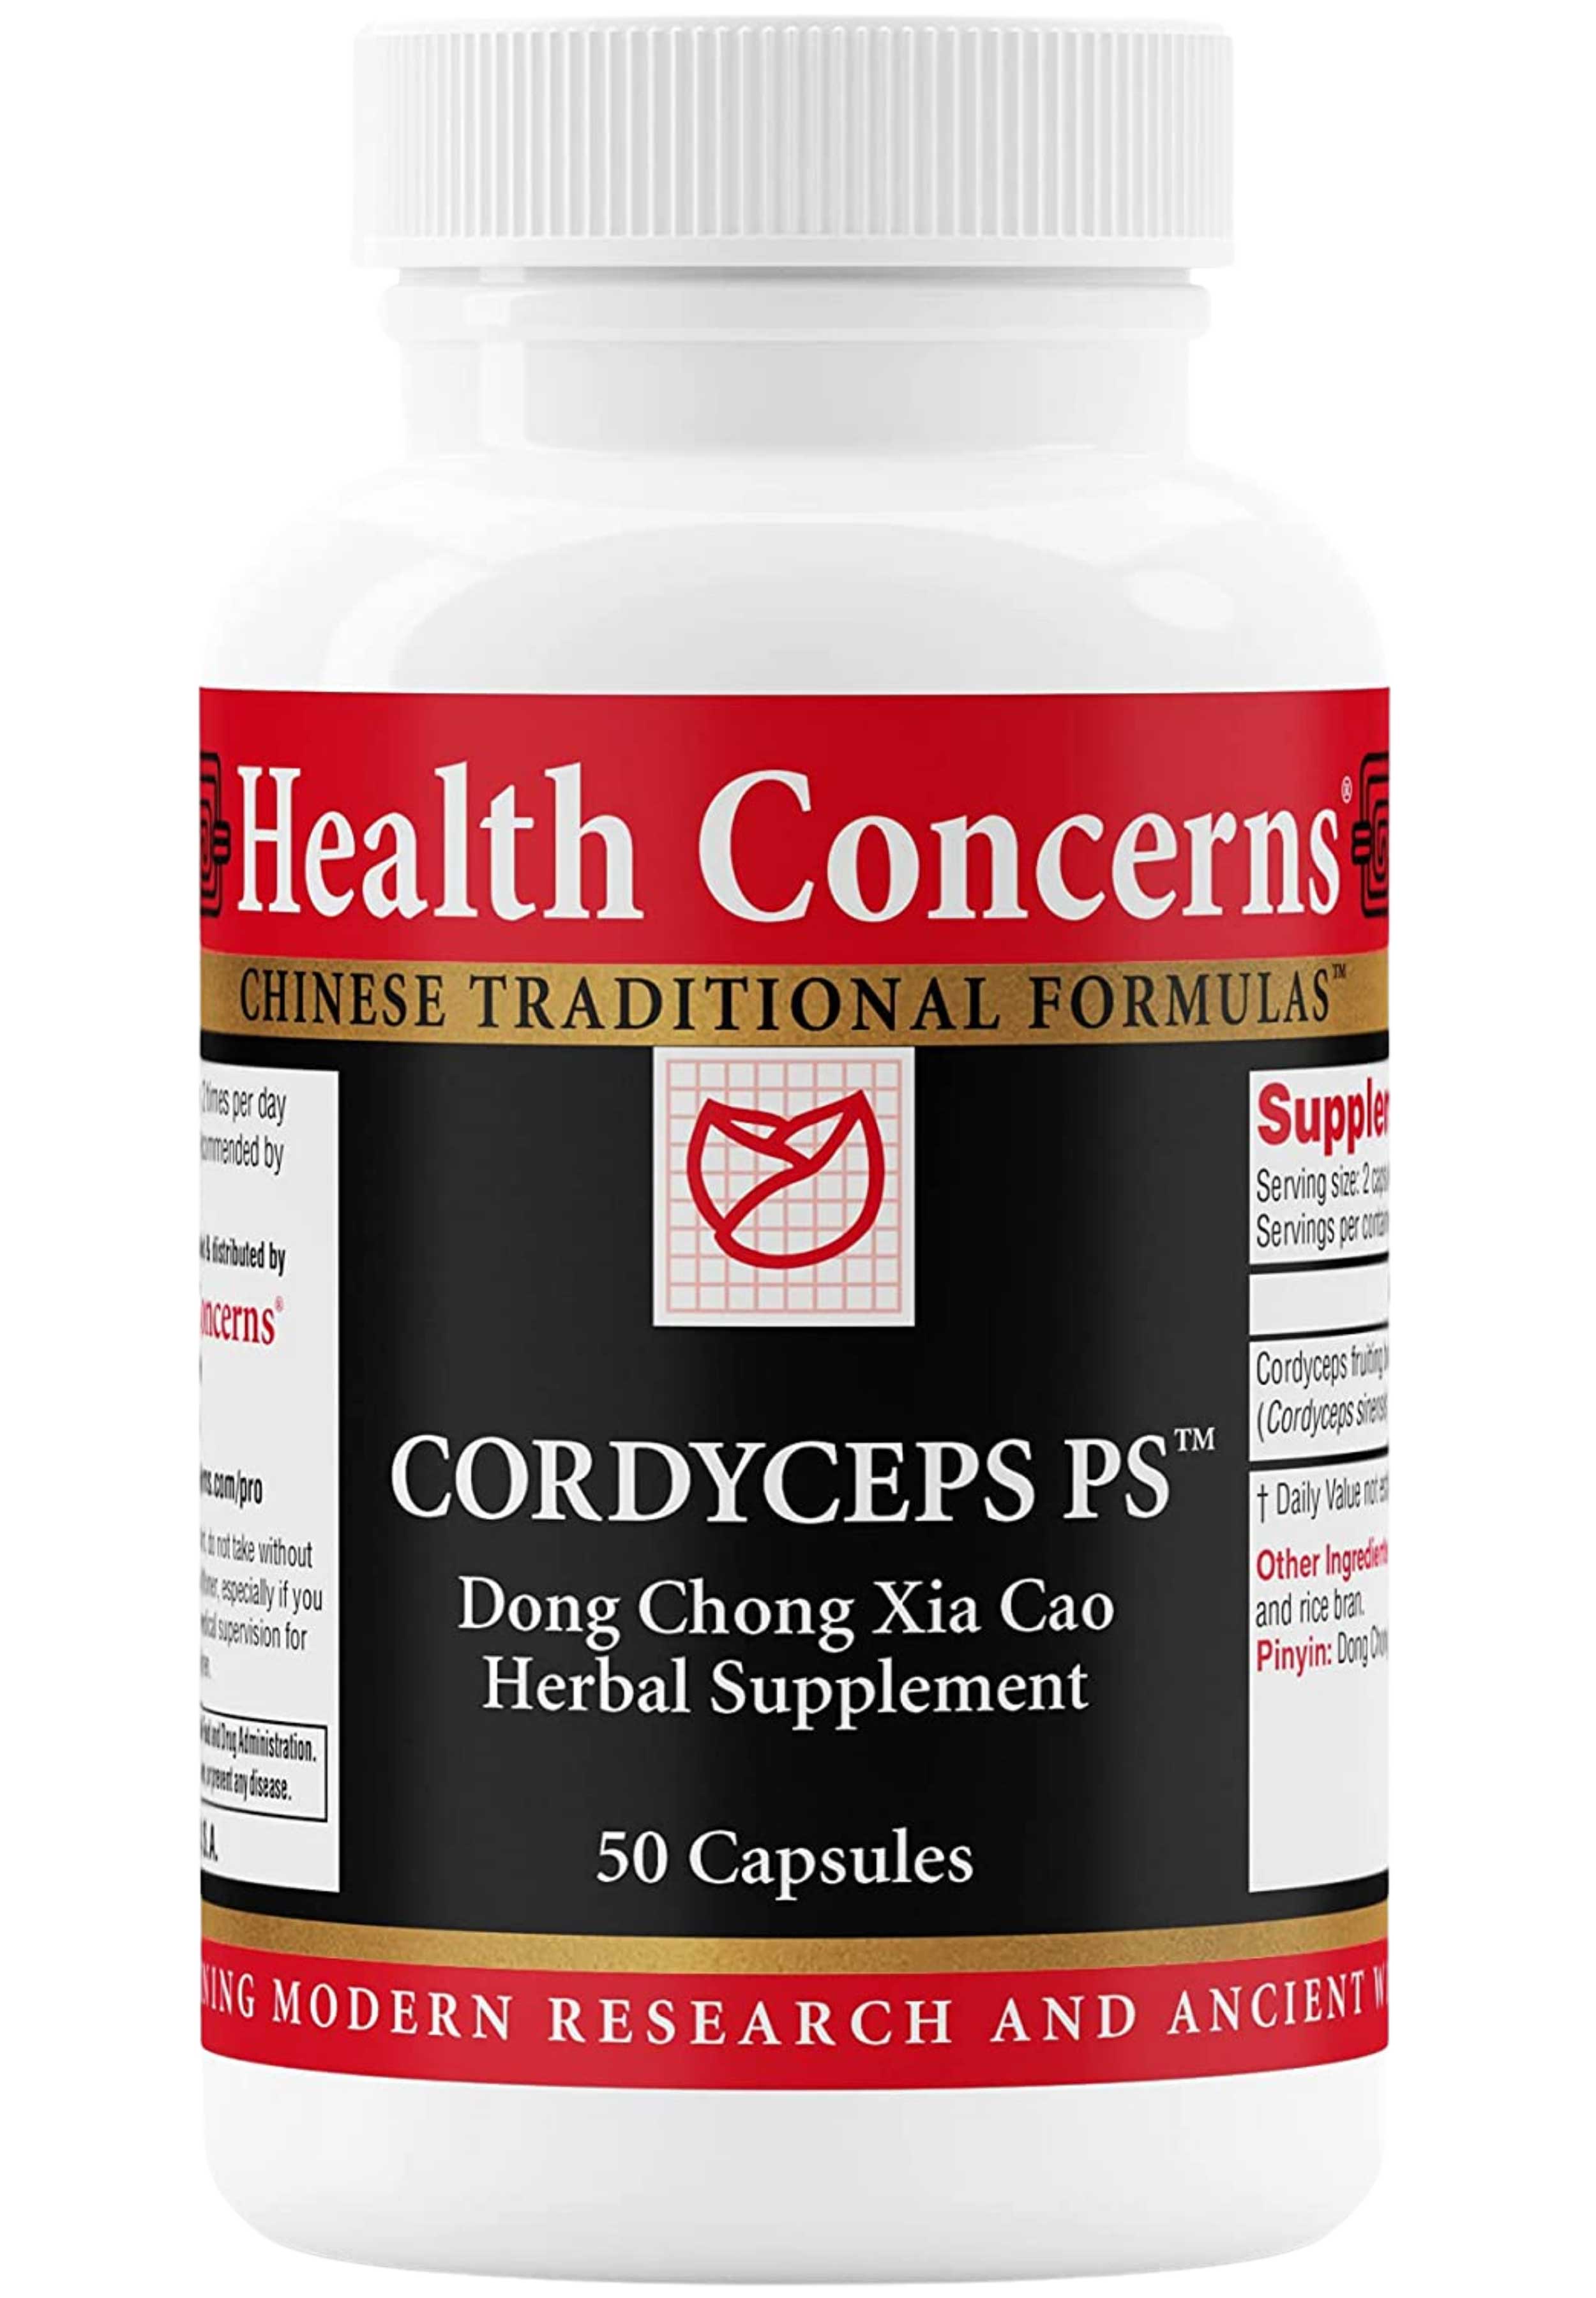 Health Concerns Cordyceps PS